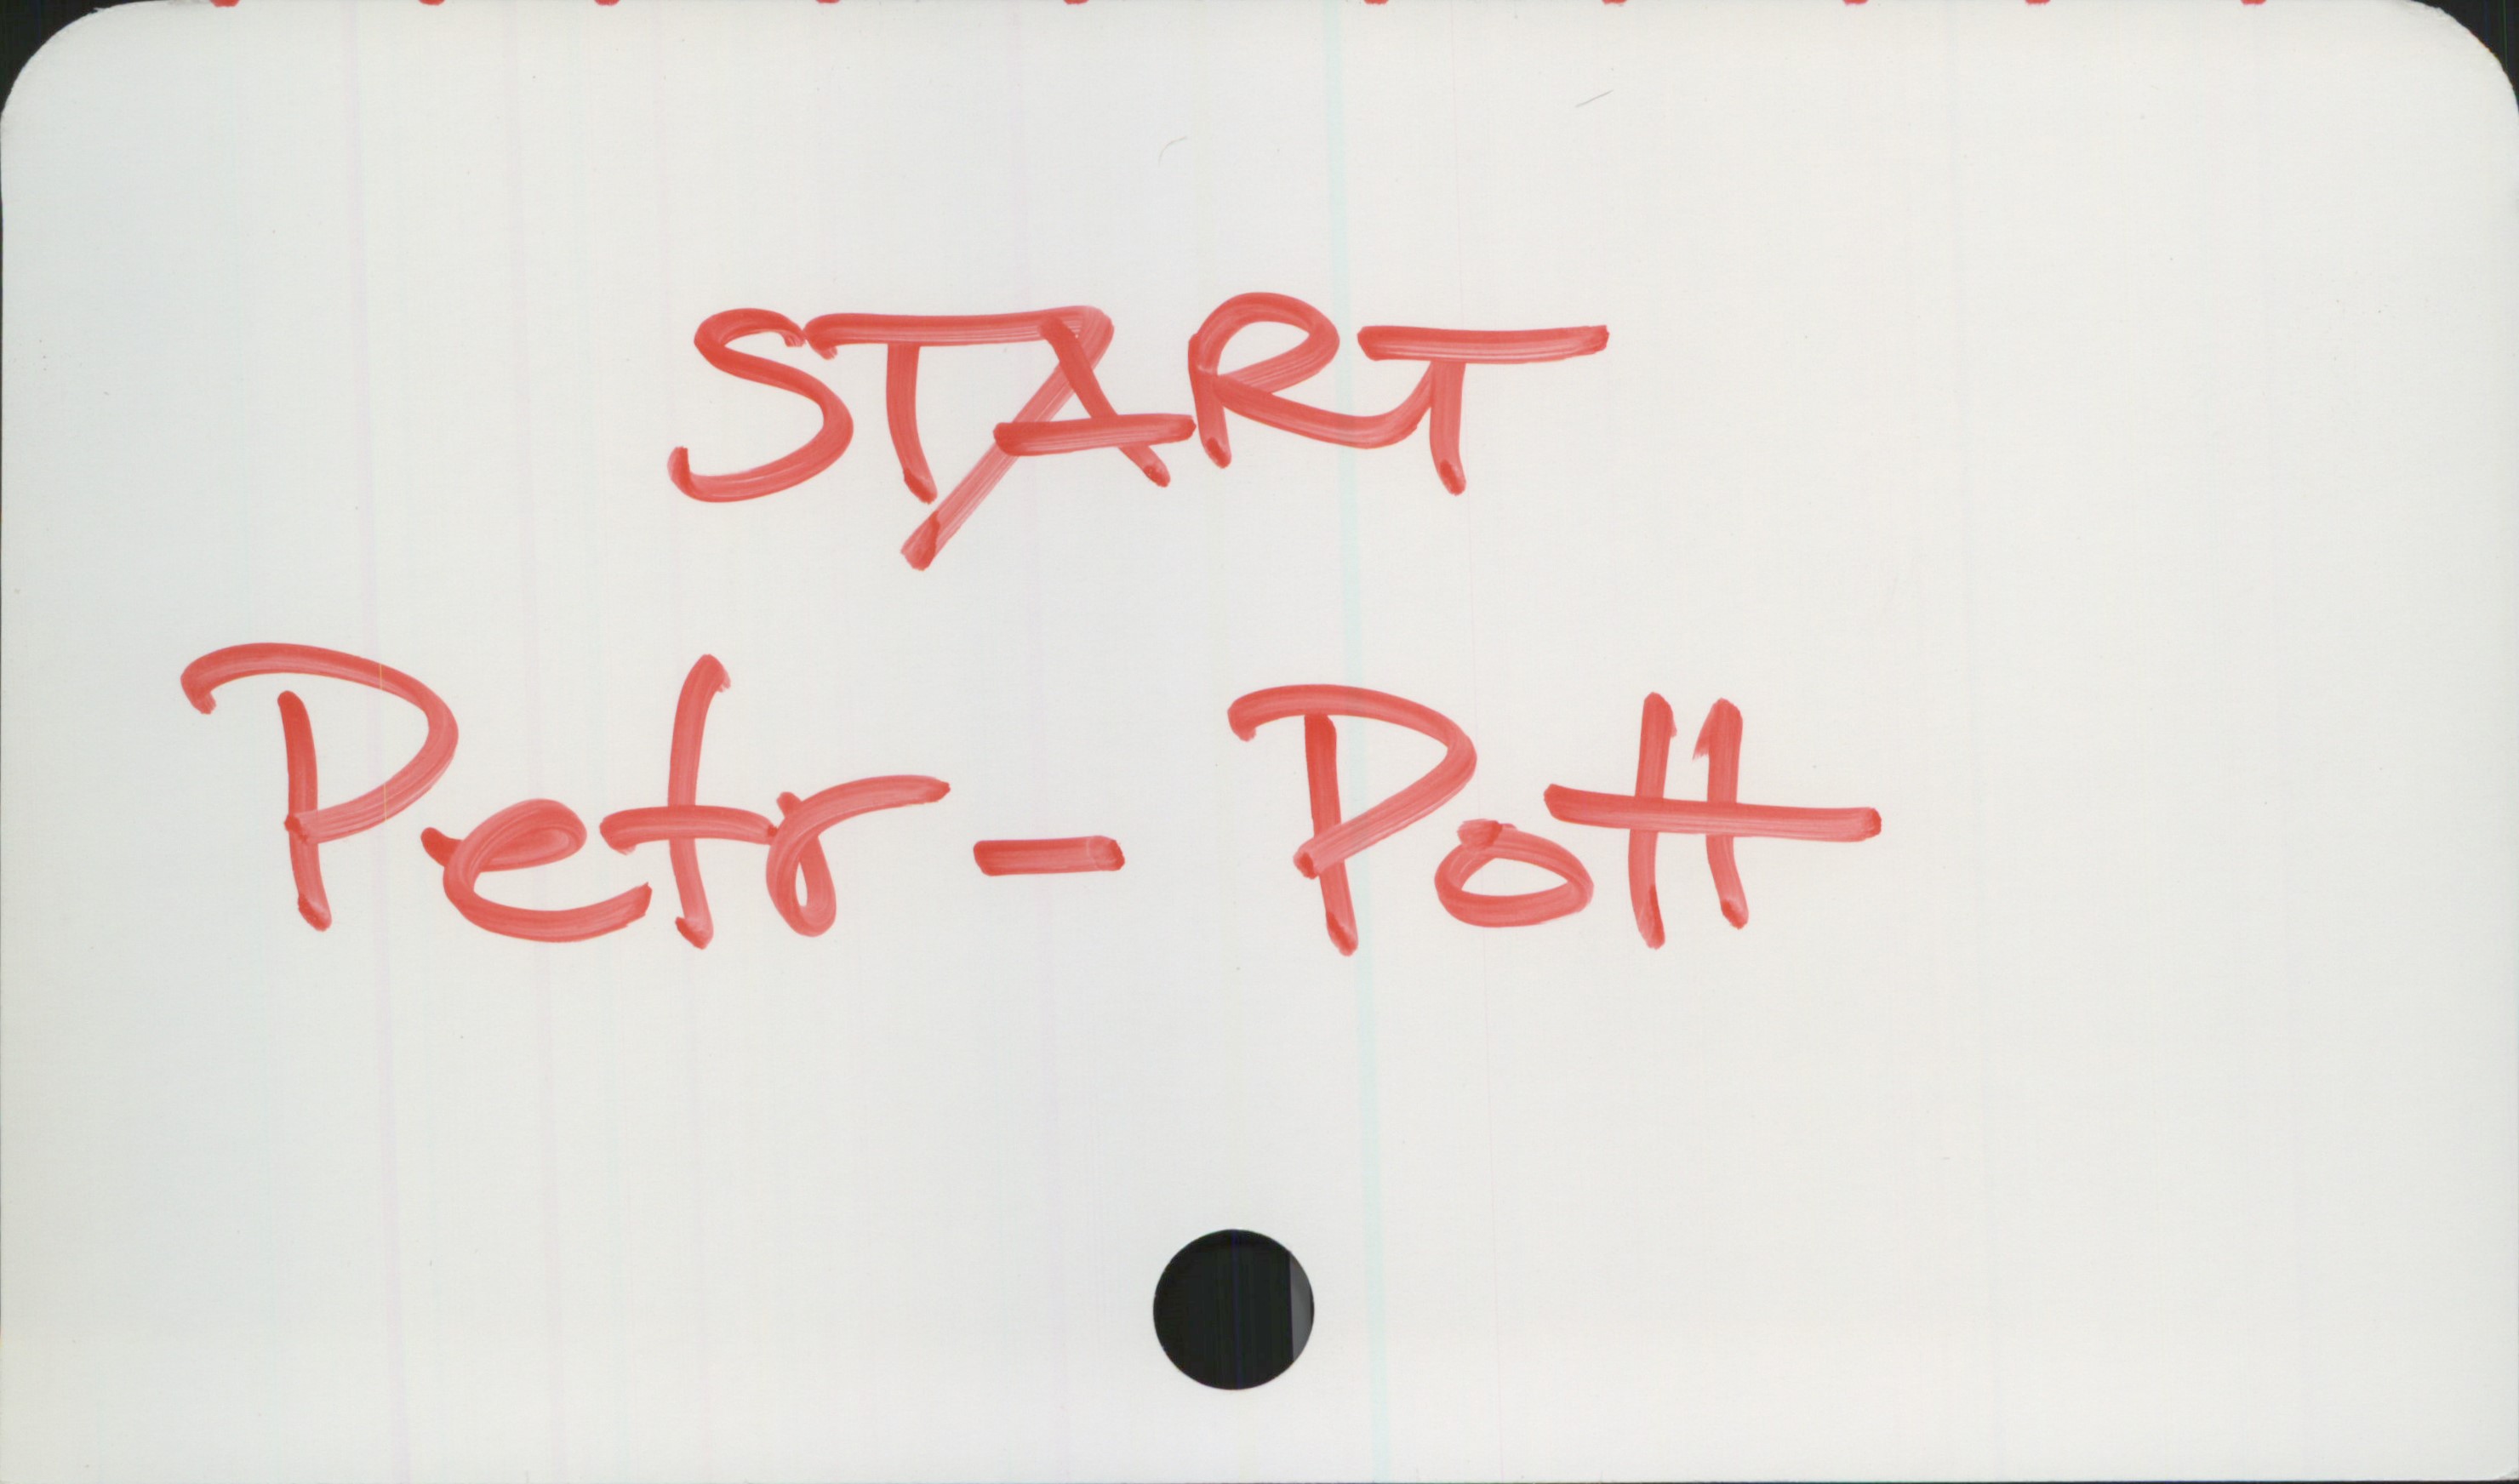 START Petr-Pott START
Petr-Pott